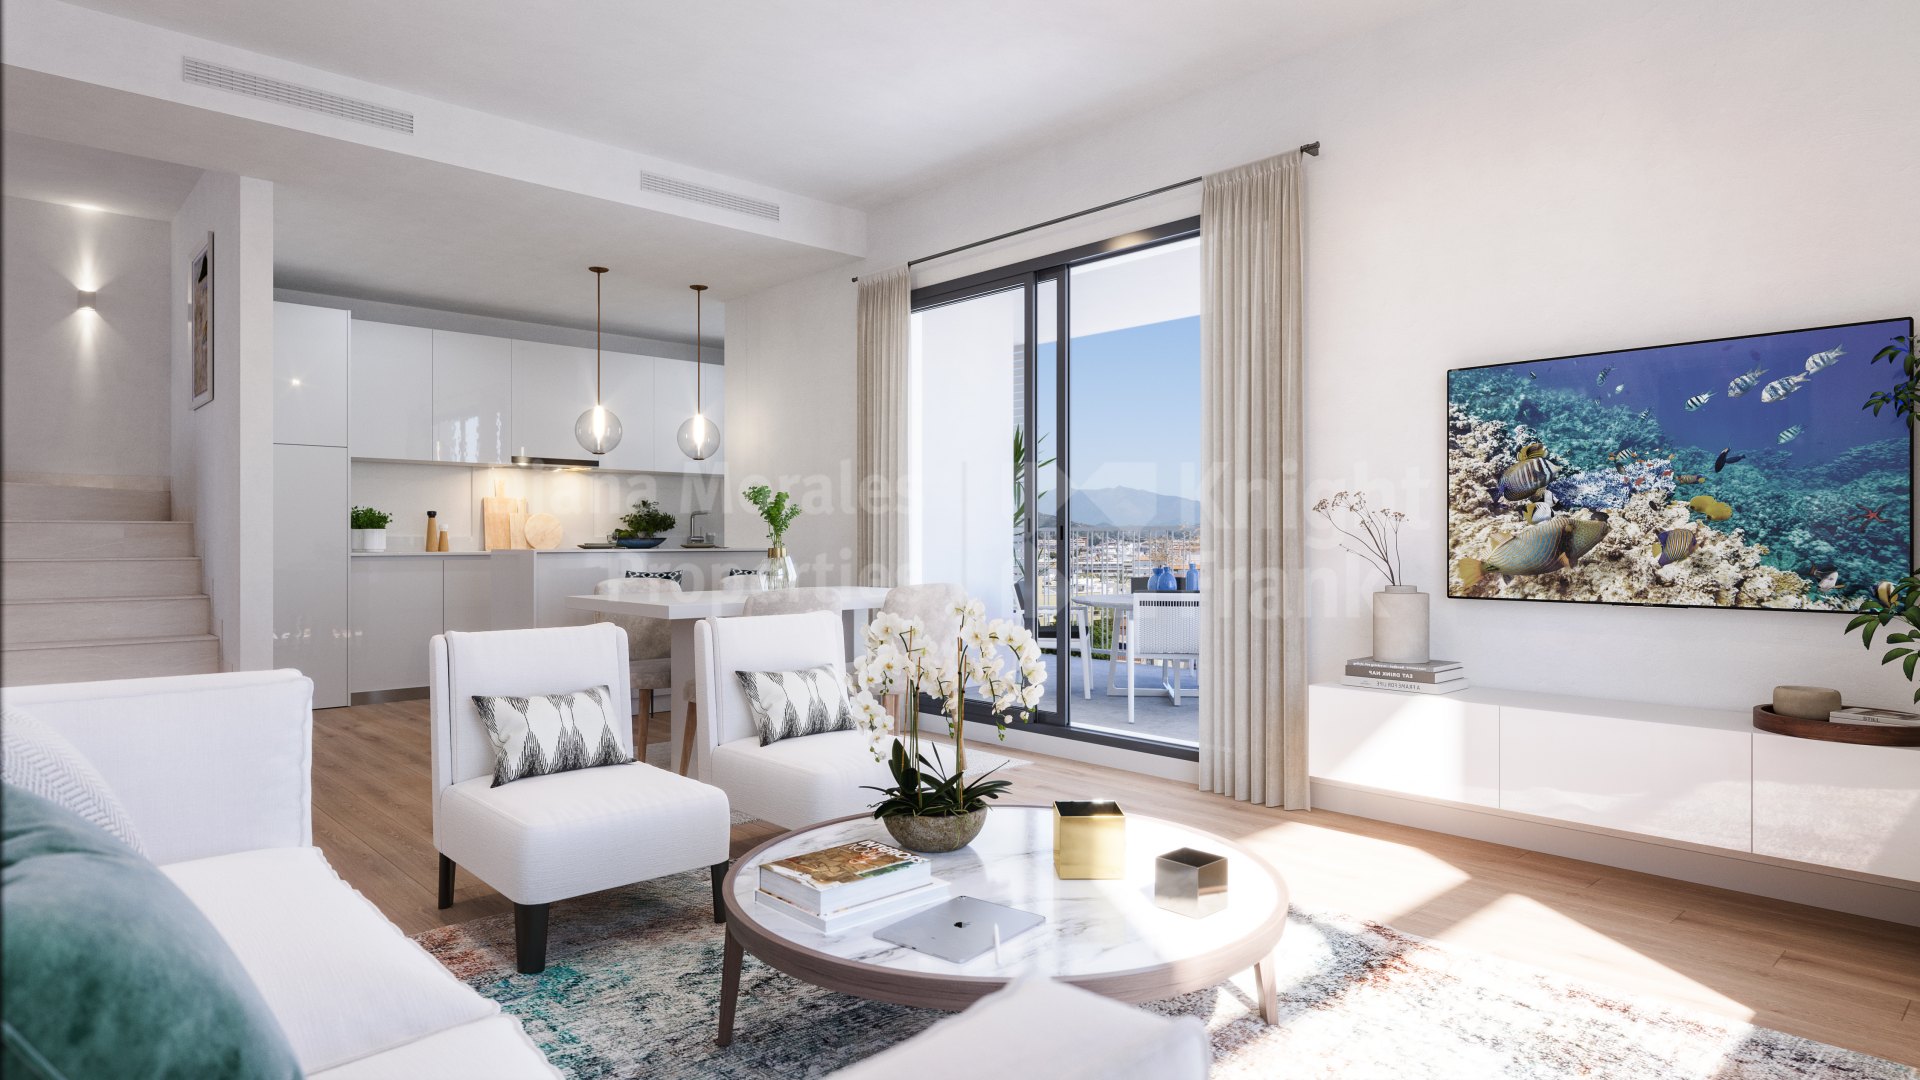 Estepona Centre, Penthouse with solarium in Isadora Living, a new apartment complex